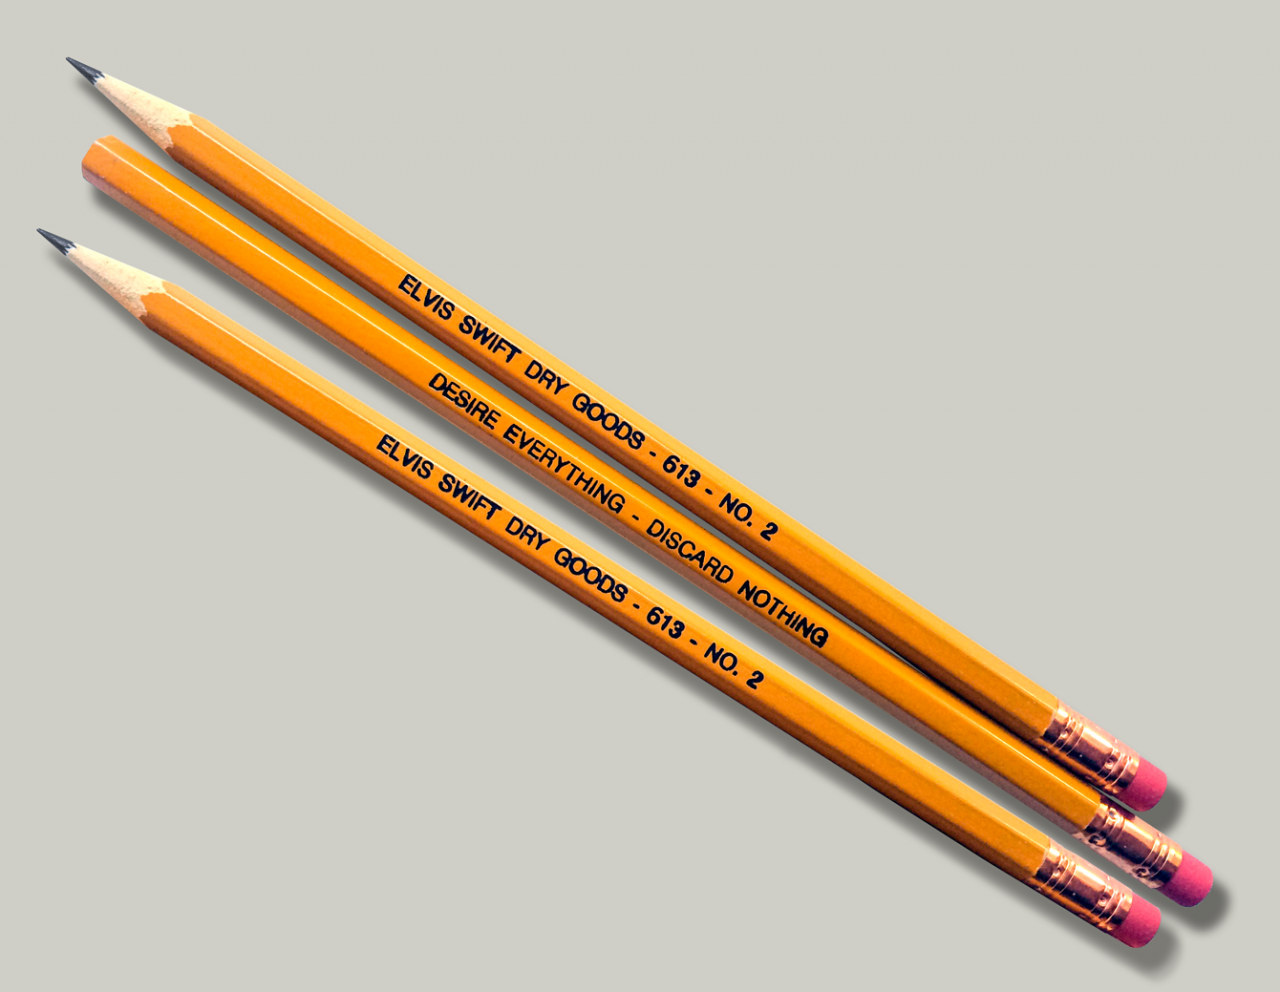 Pencil definition